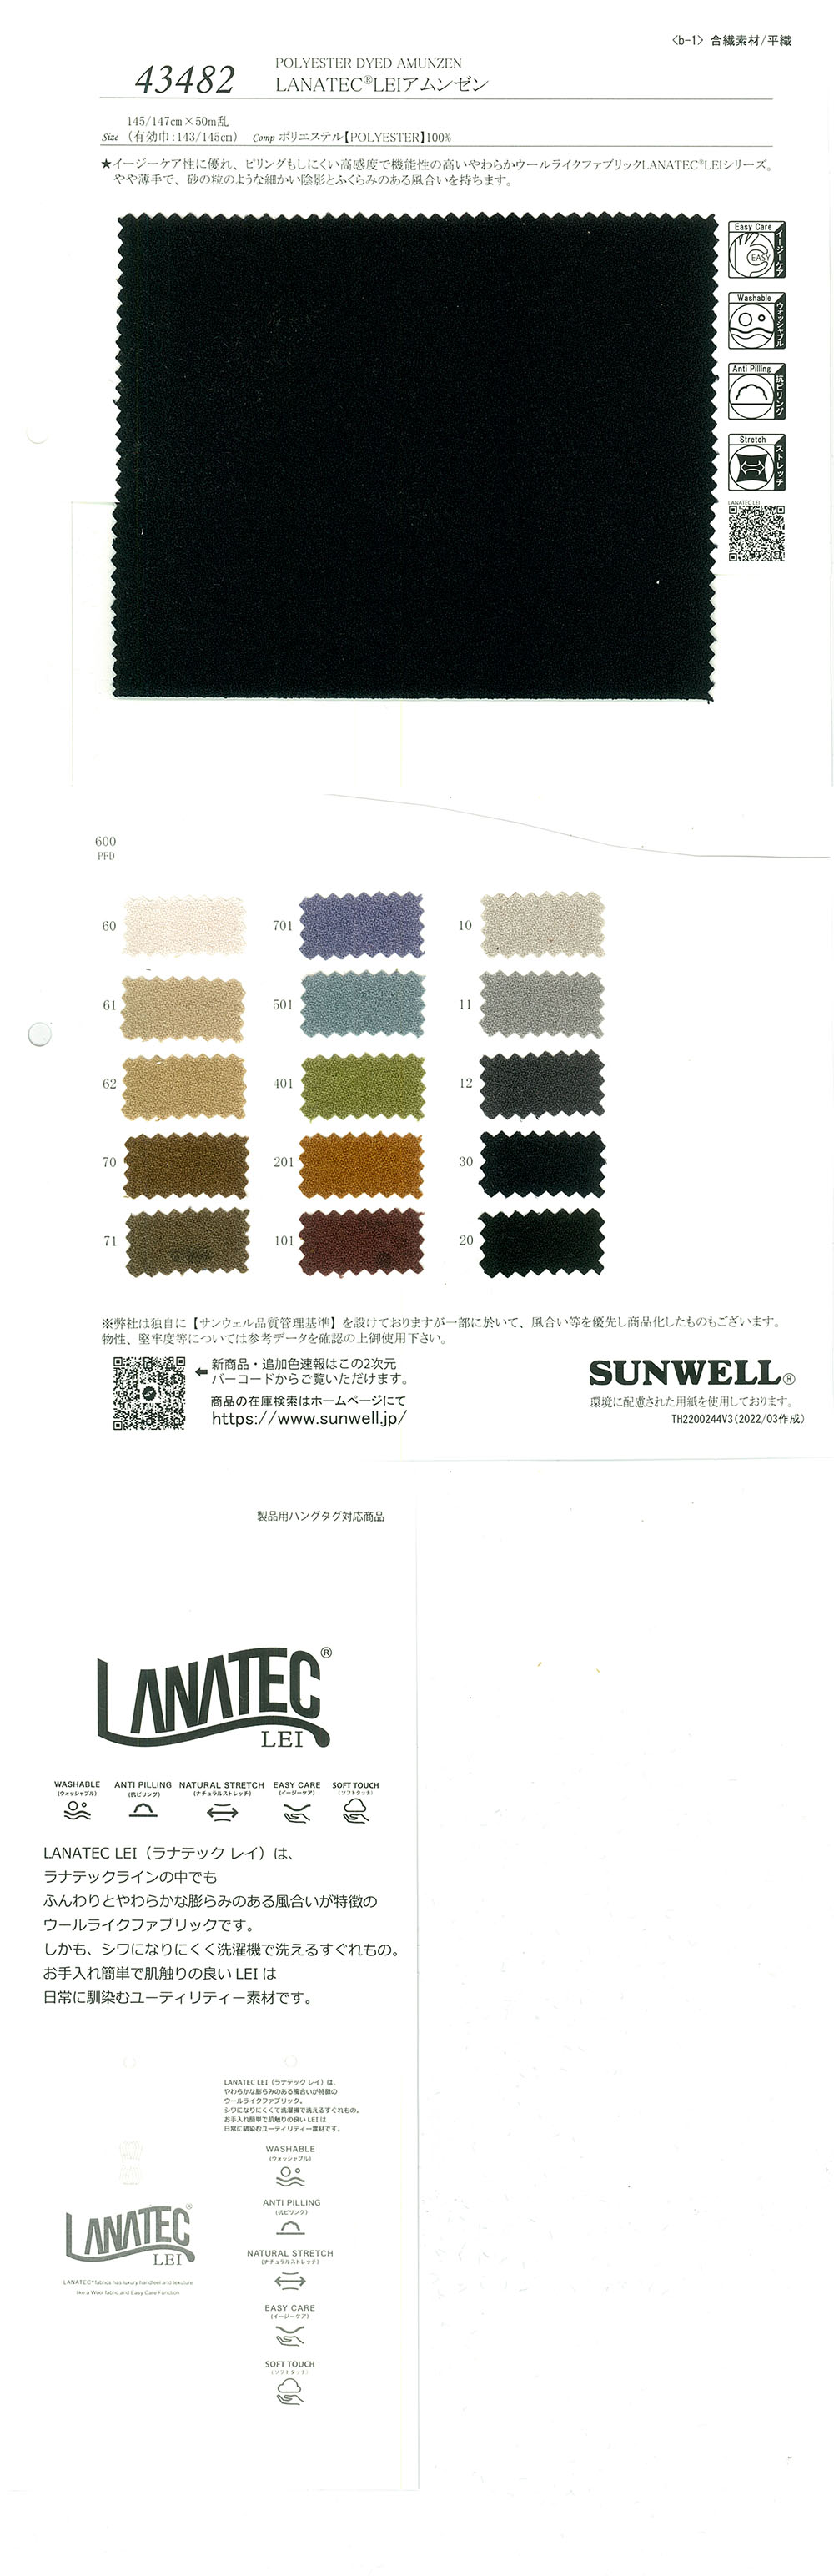 43482 LANATEC(R) LEI Rugosidad Superficie[Fabrica Textil] SUNWELL